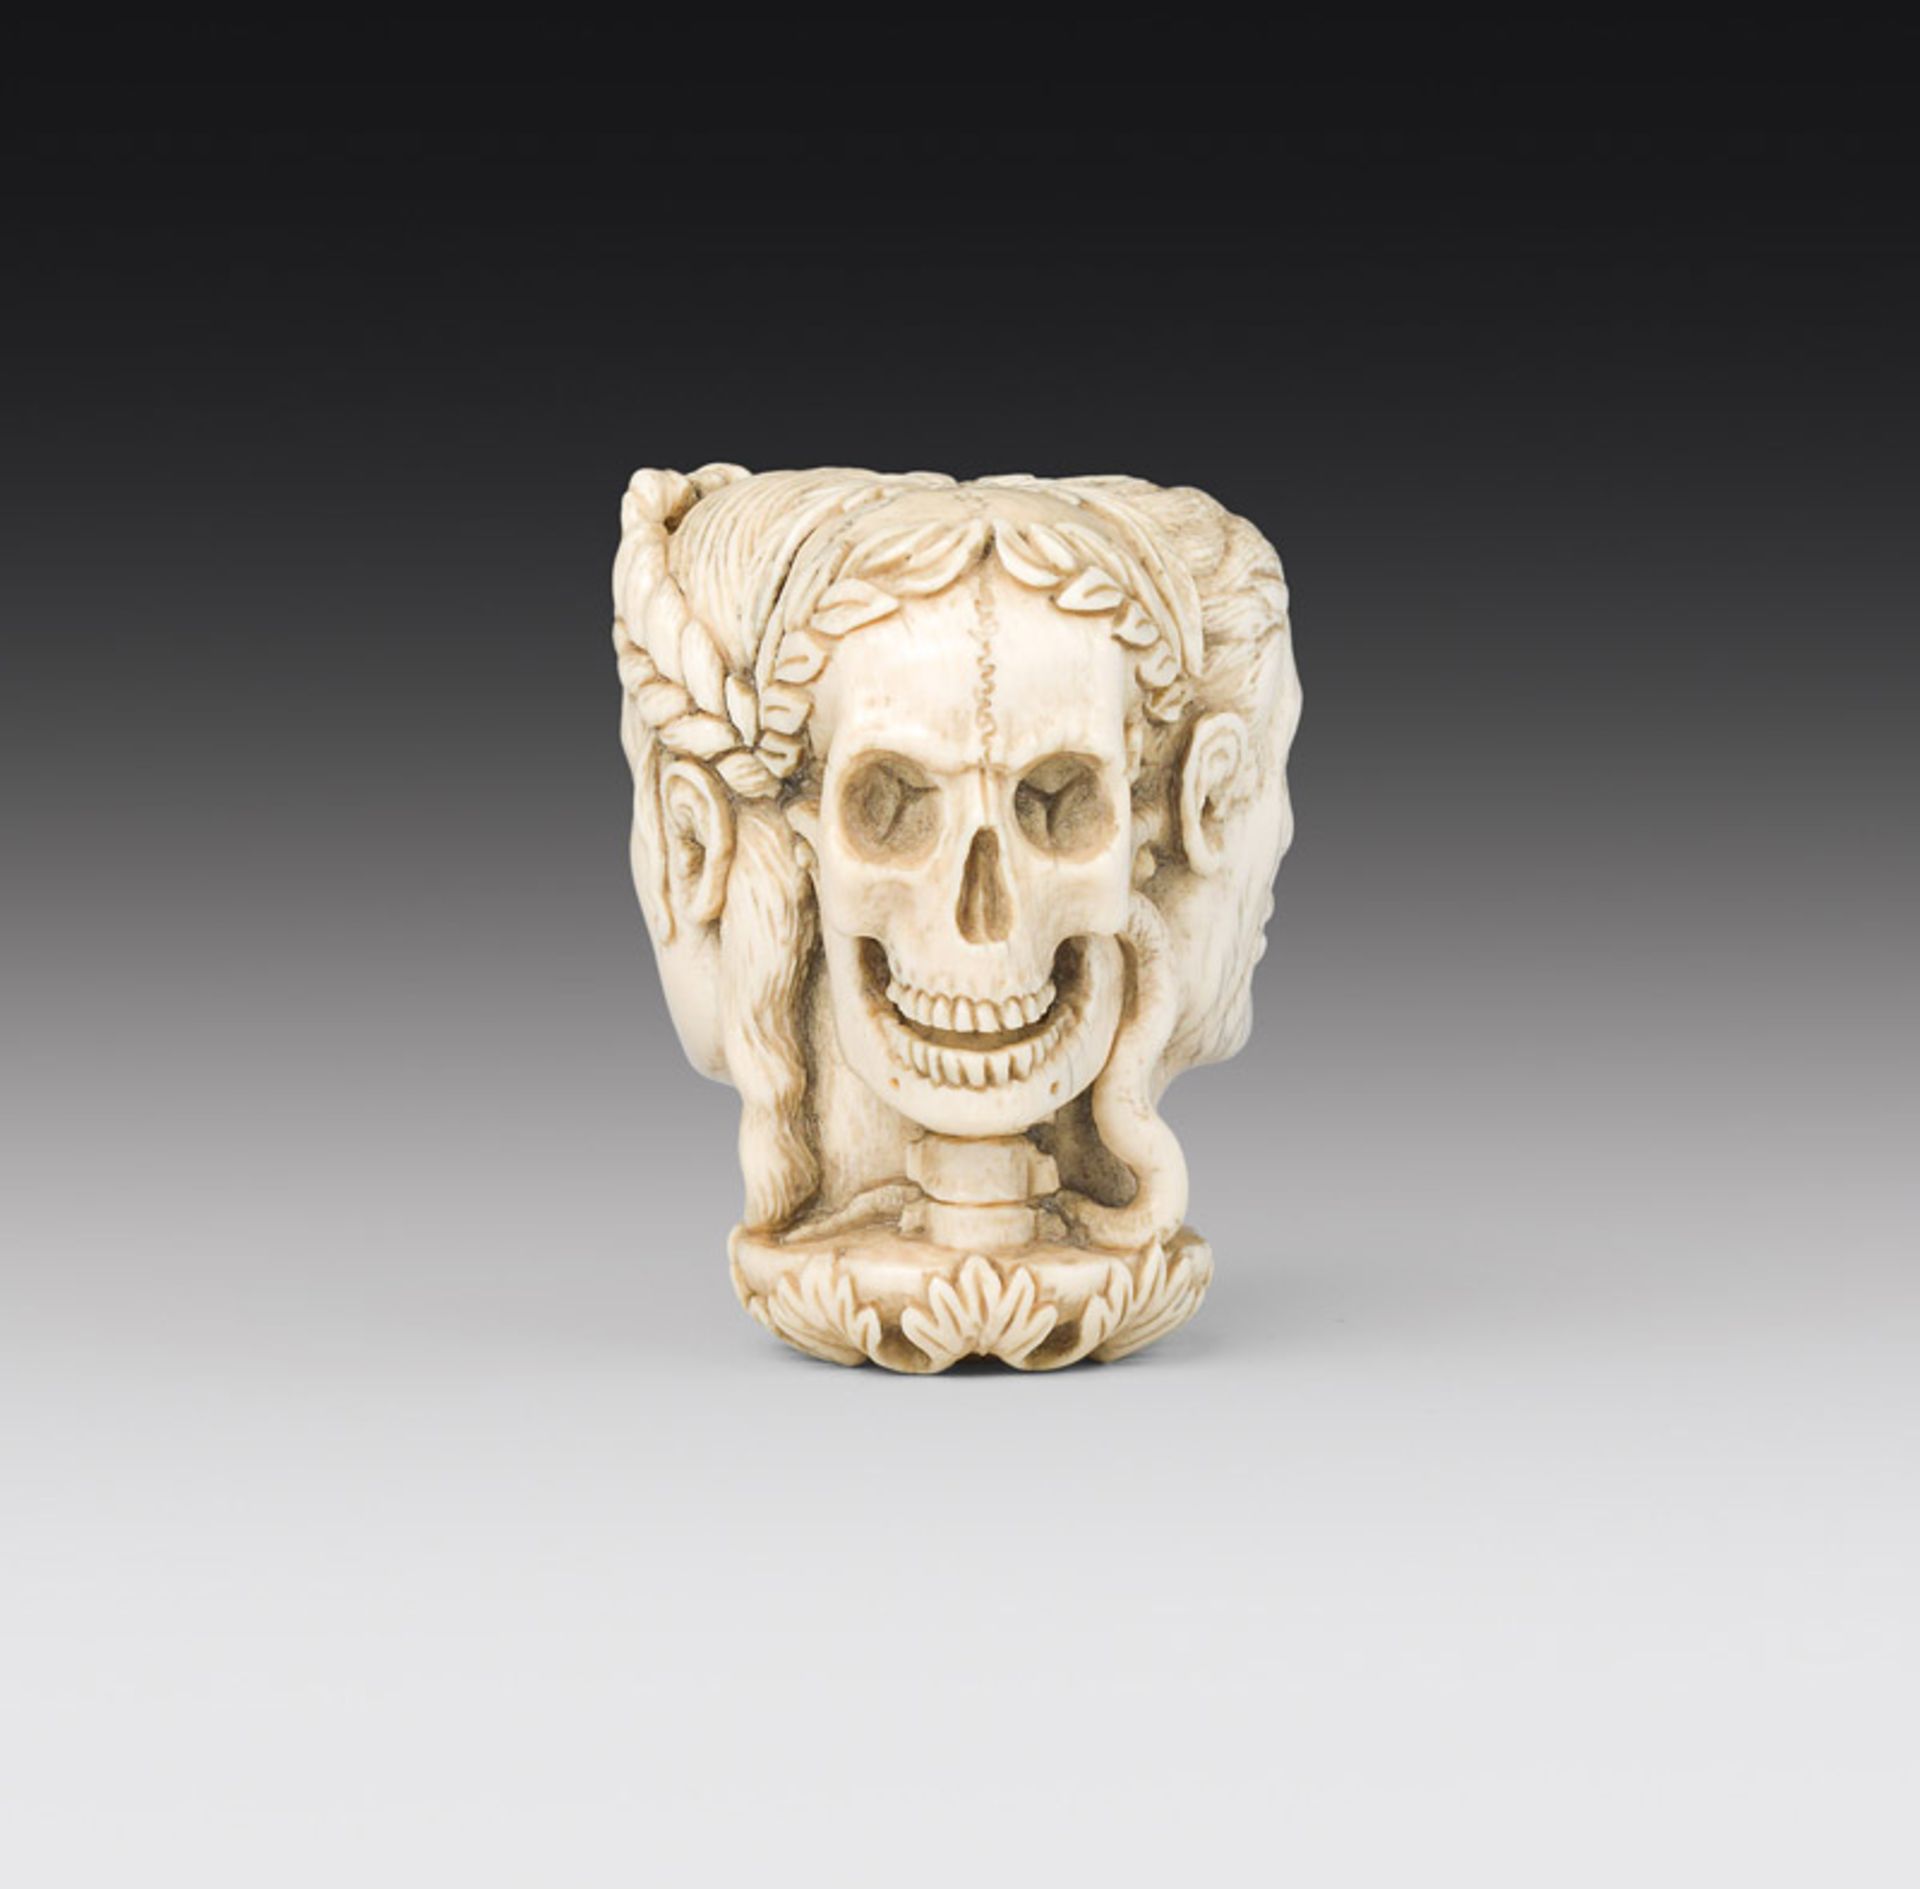 Ivory skull, 17th century